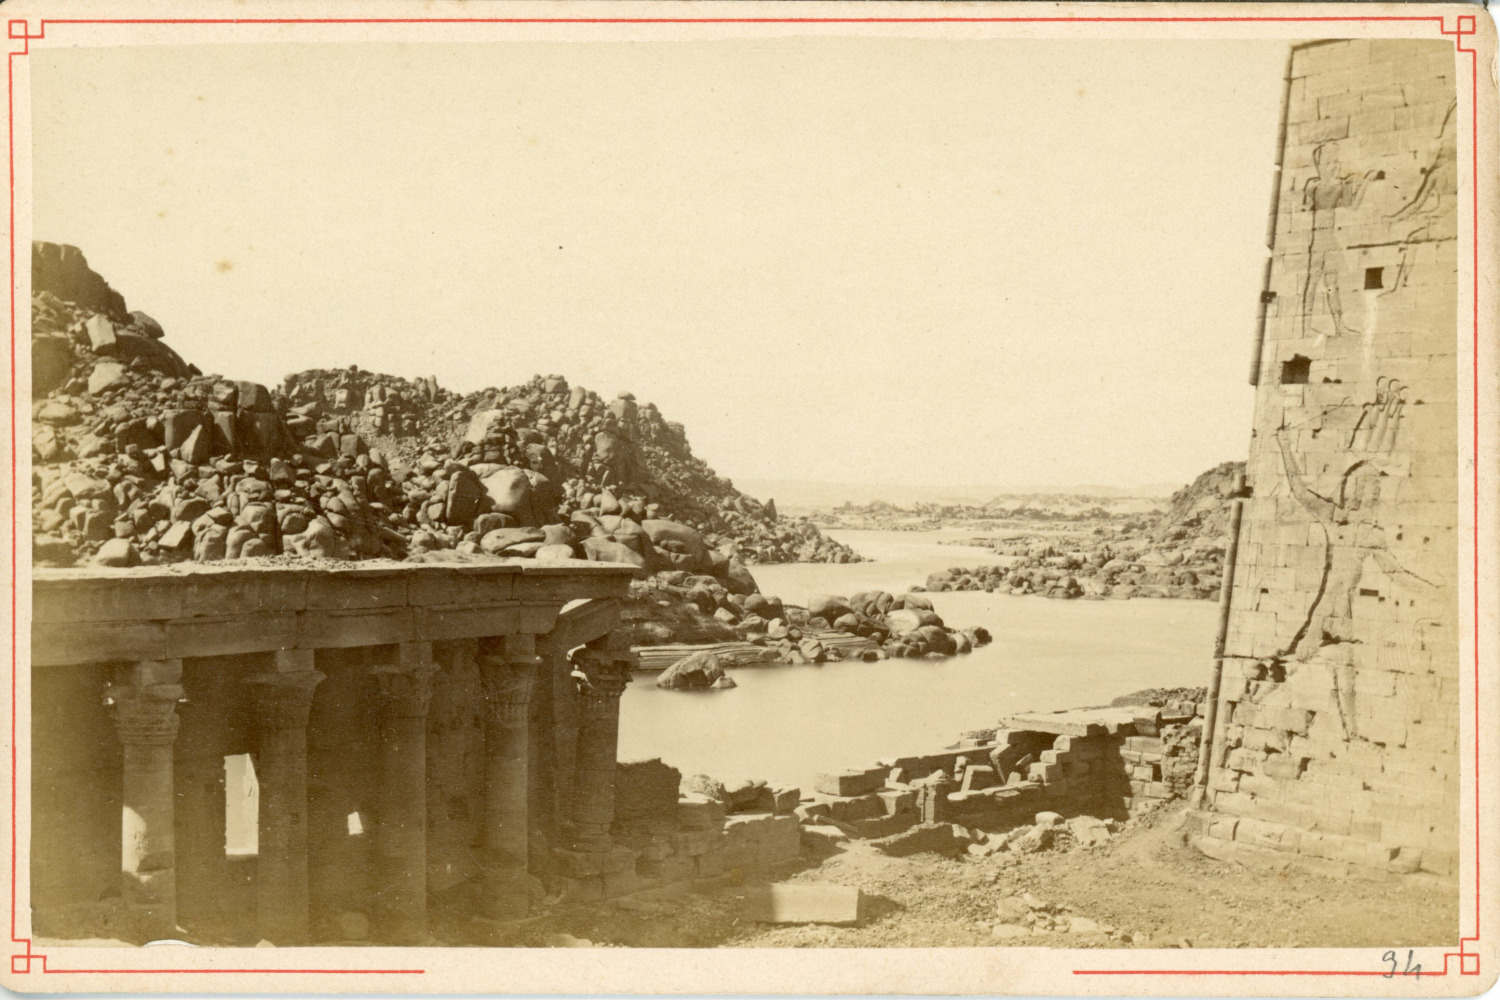 Egypt, Philae, ca.1885, vintage albumen print vintage albumen print shot